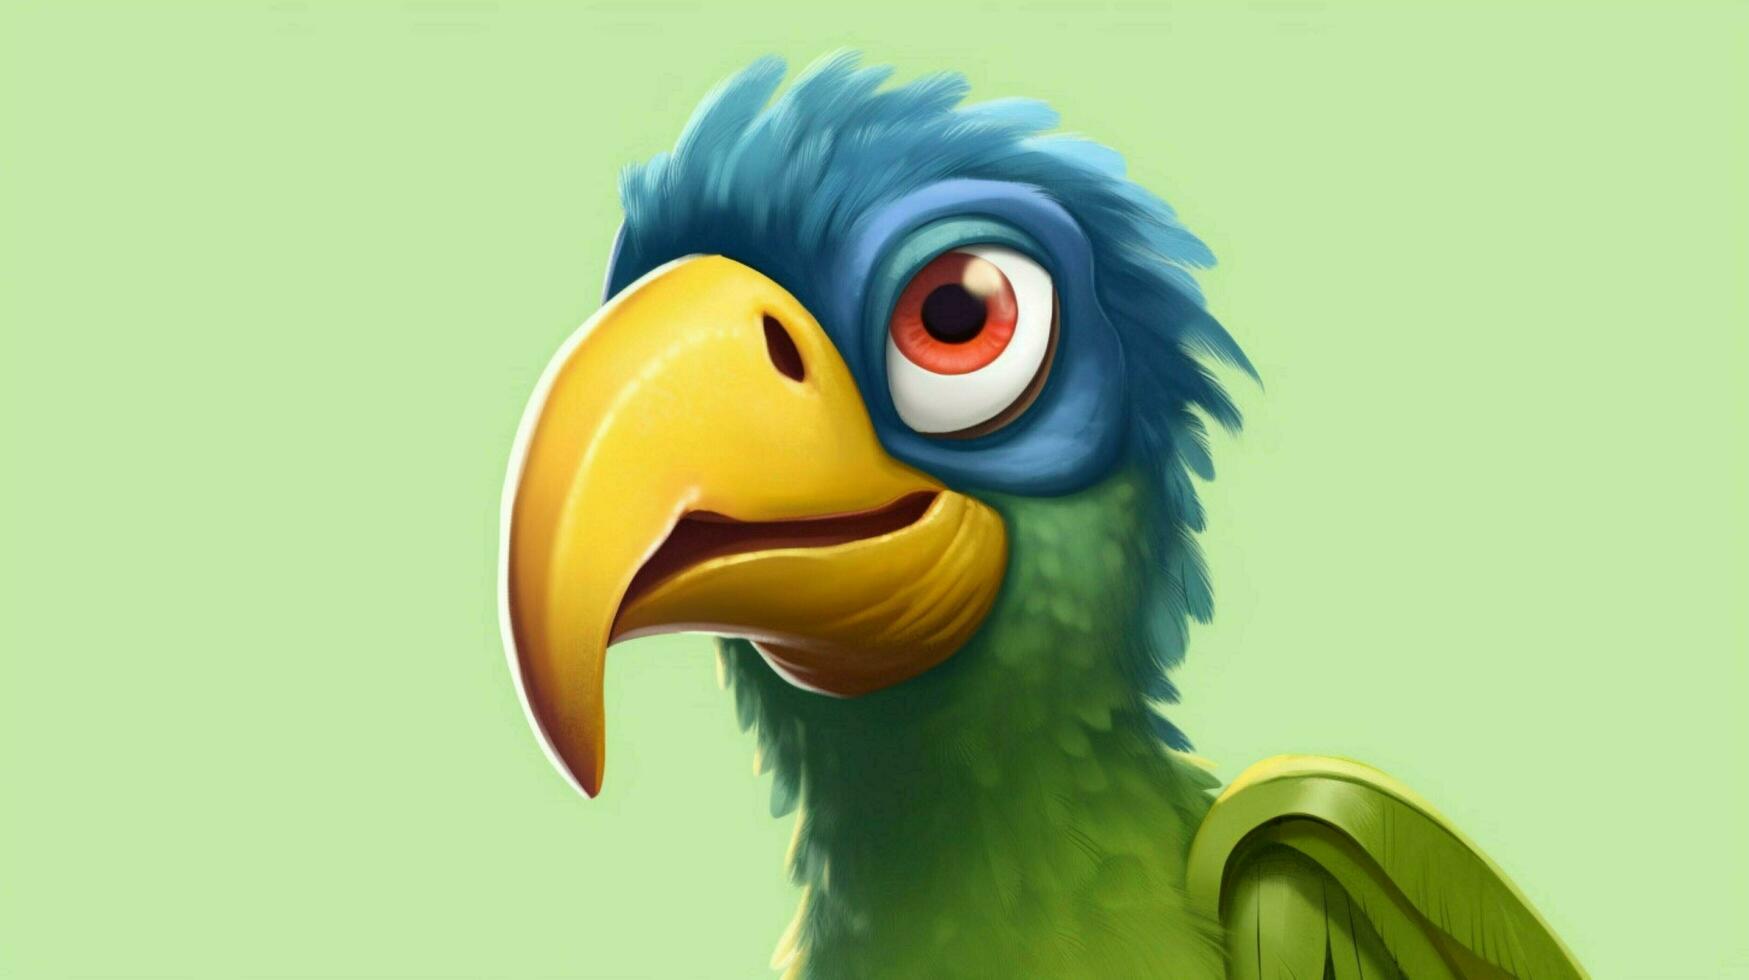 a cartoon bird with a green beak and a yellow bea photo